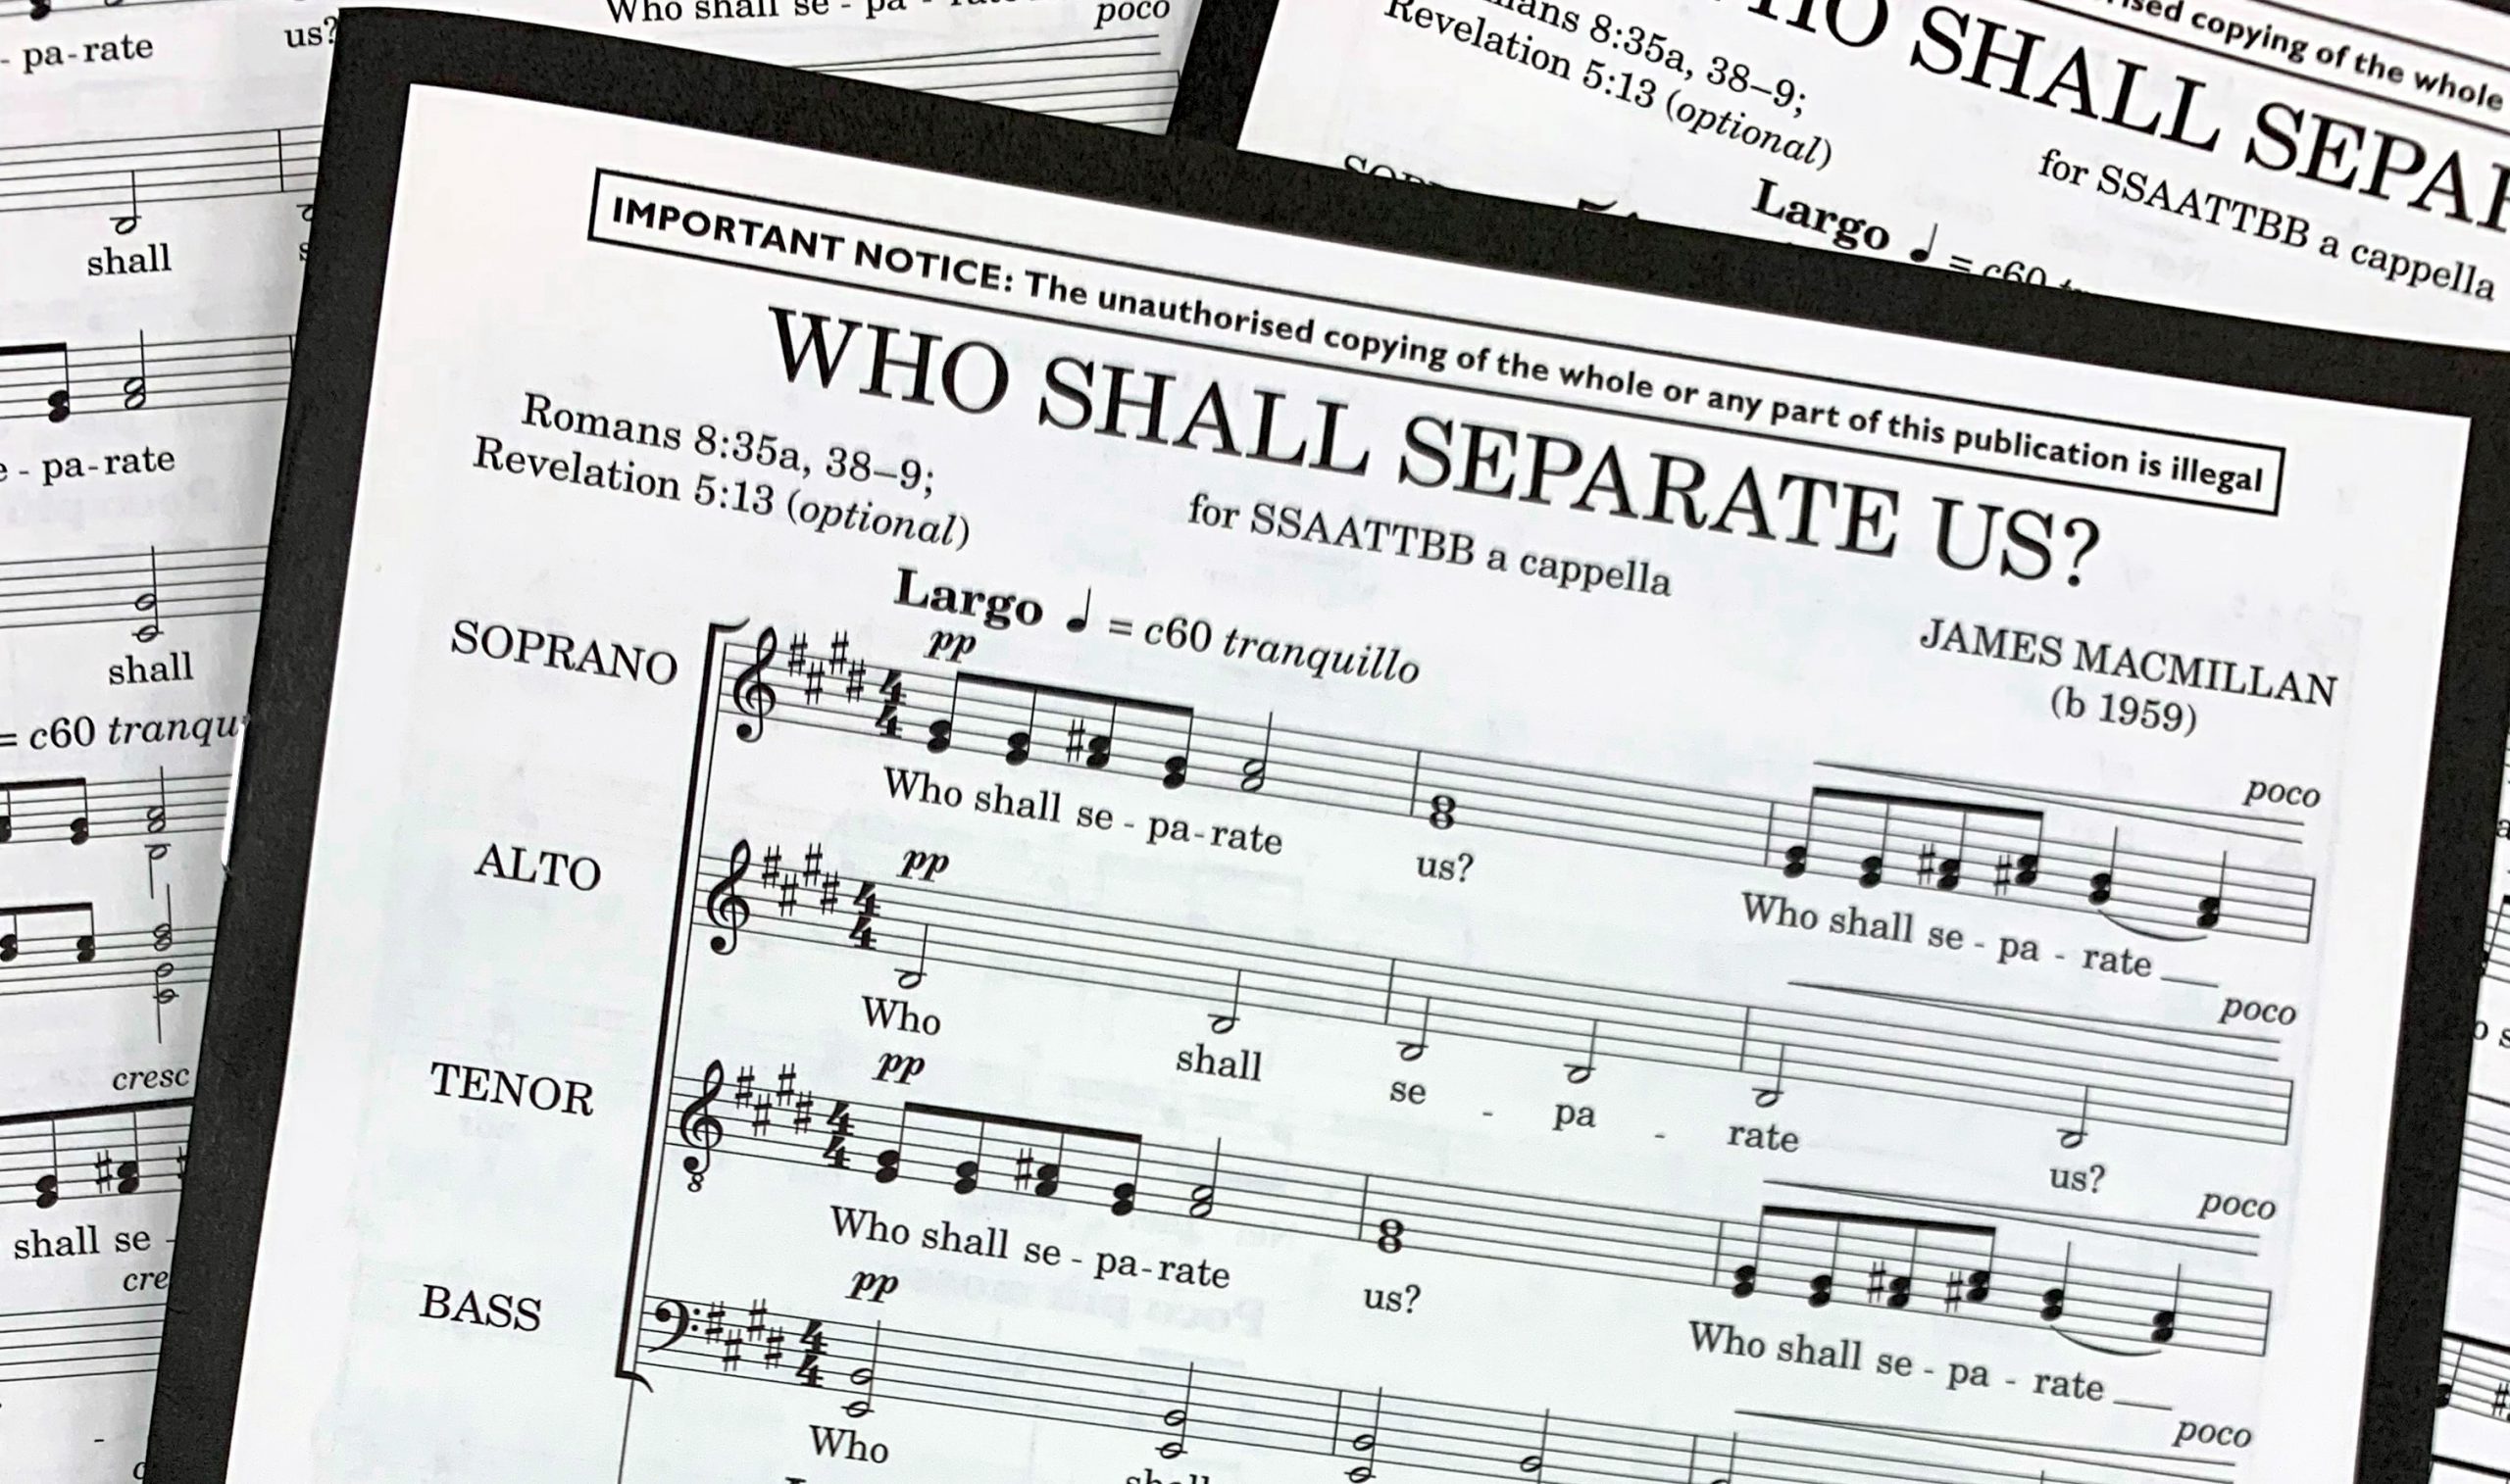 Halstan Print New Choral Work For Queen Elizabeth II’s funeral.